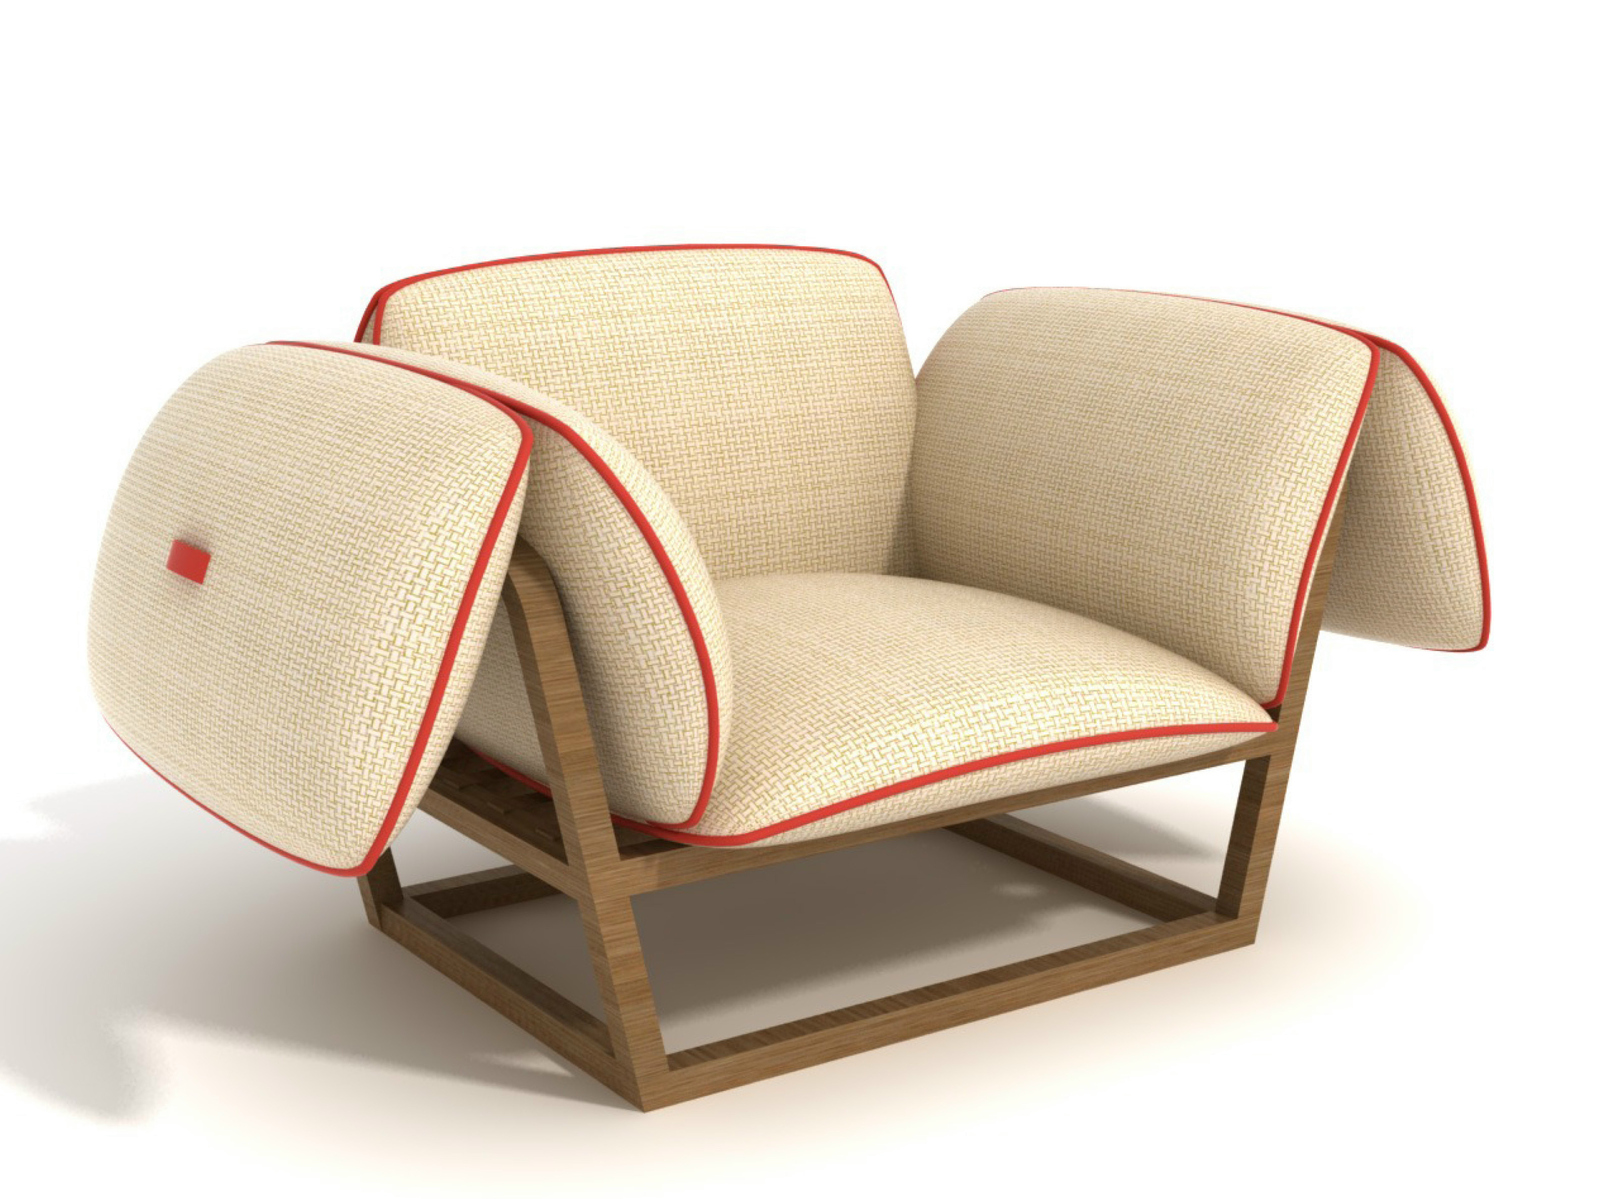 unusual-garden-armchair-has-futuristic-design-1.jpg